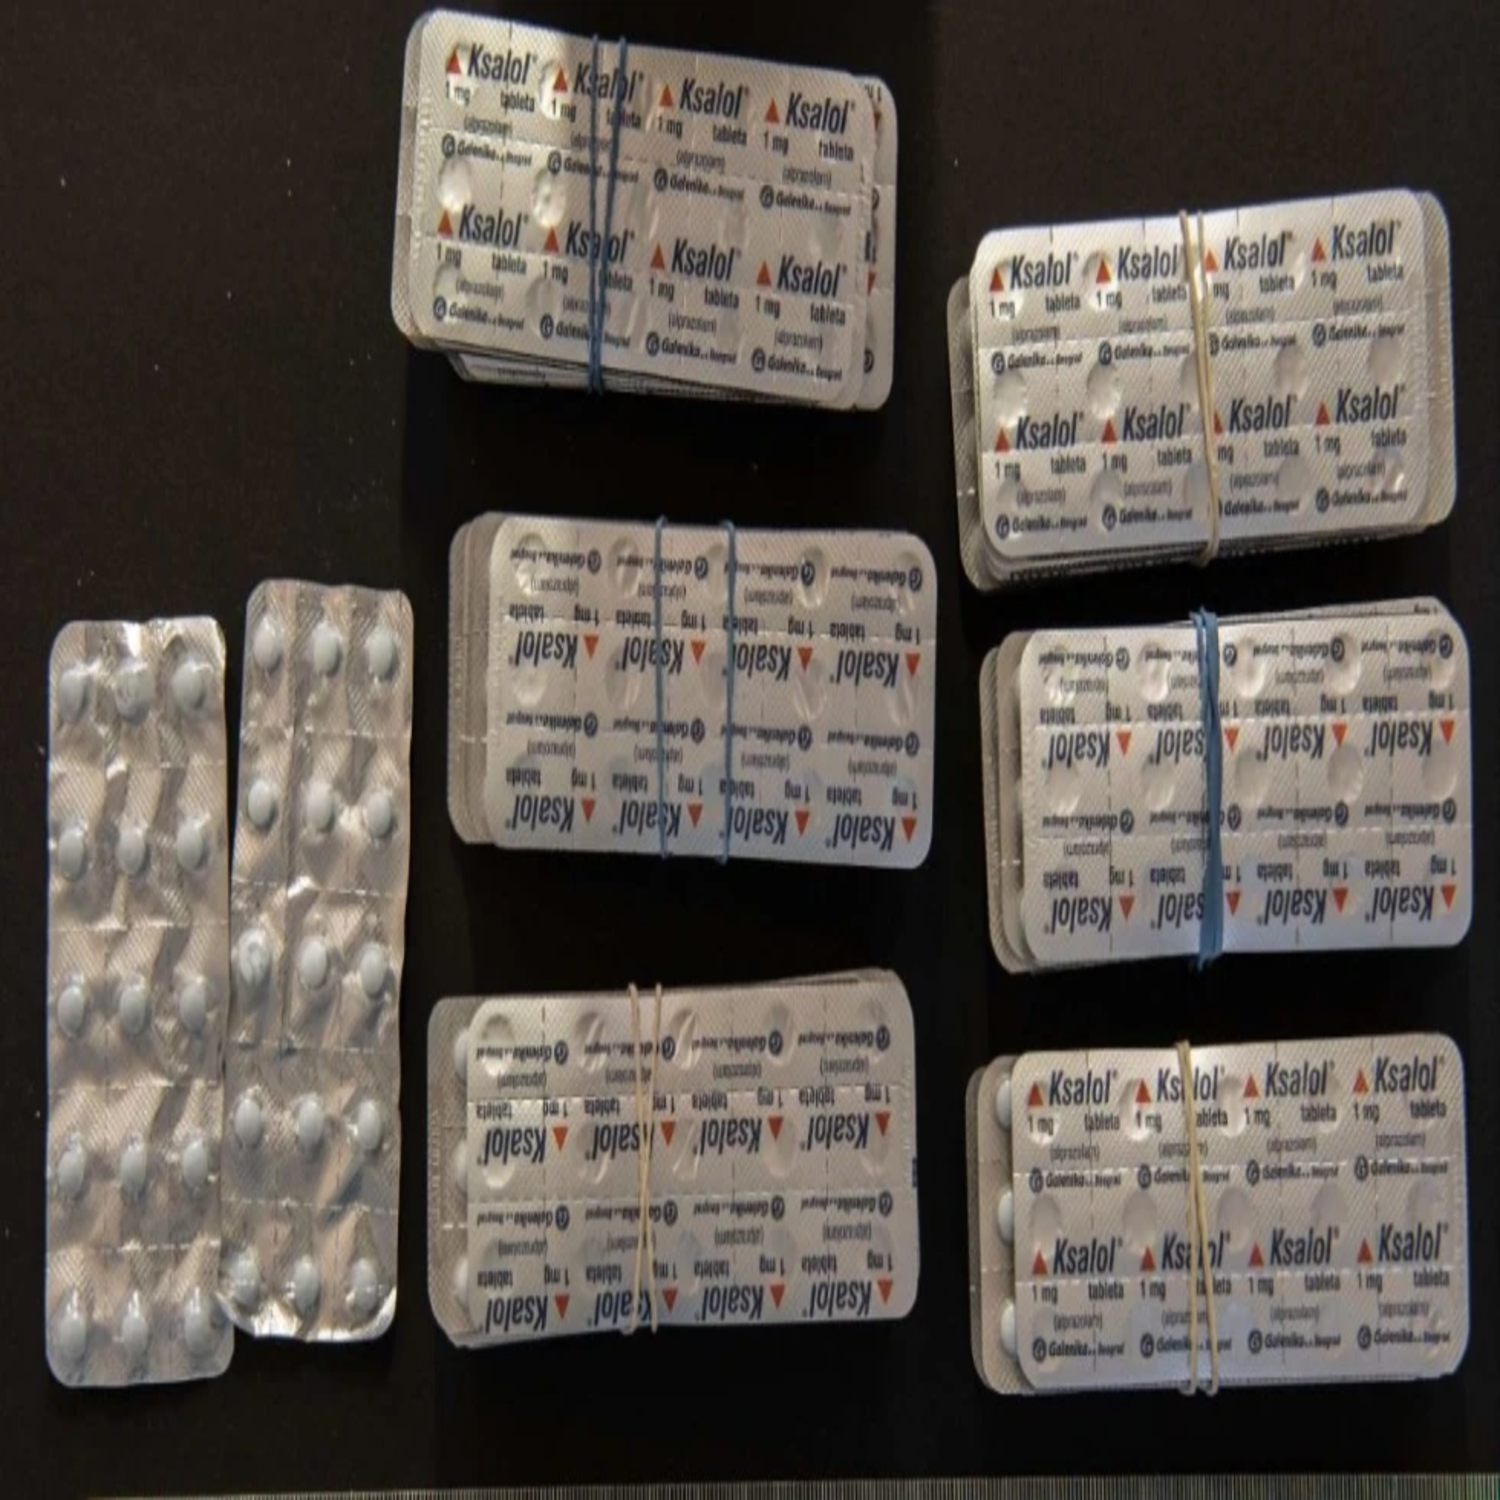 Ksalol Alprazolam Xanax 1mg Tablets